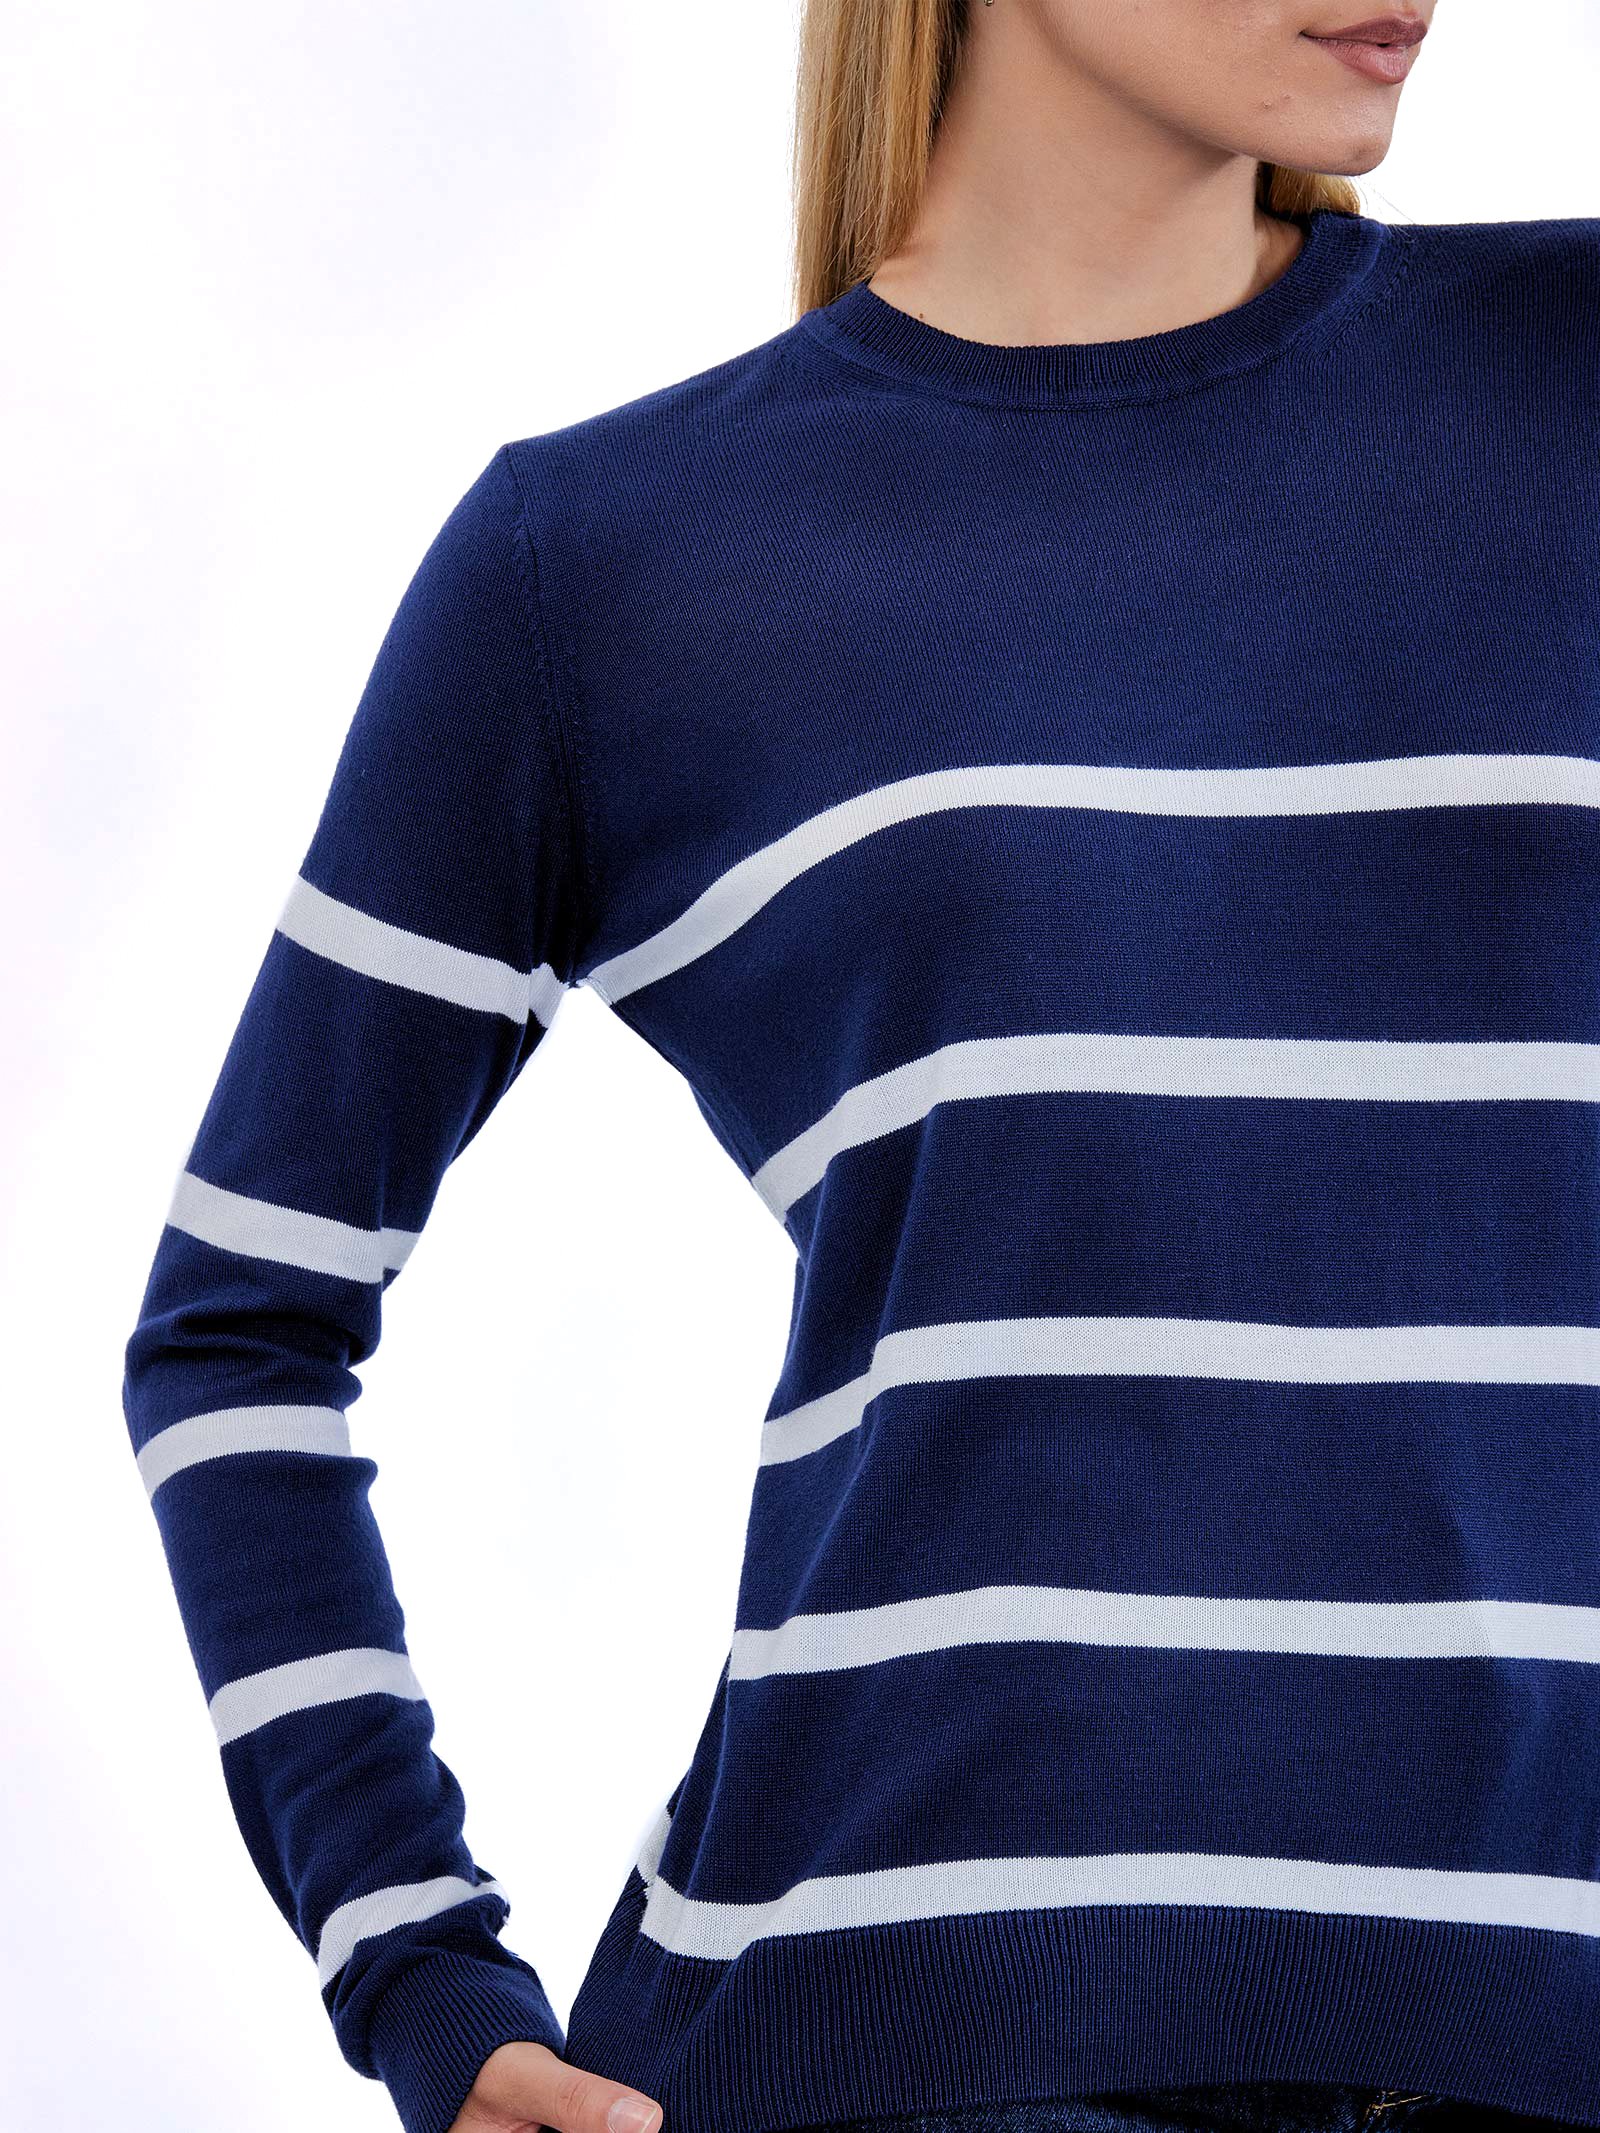 Striped Crew Neck Sweater Navy Blue